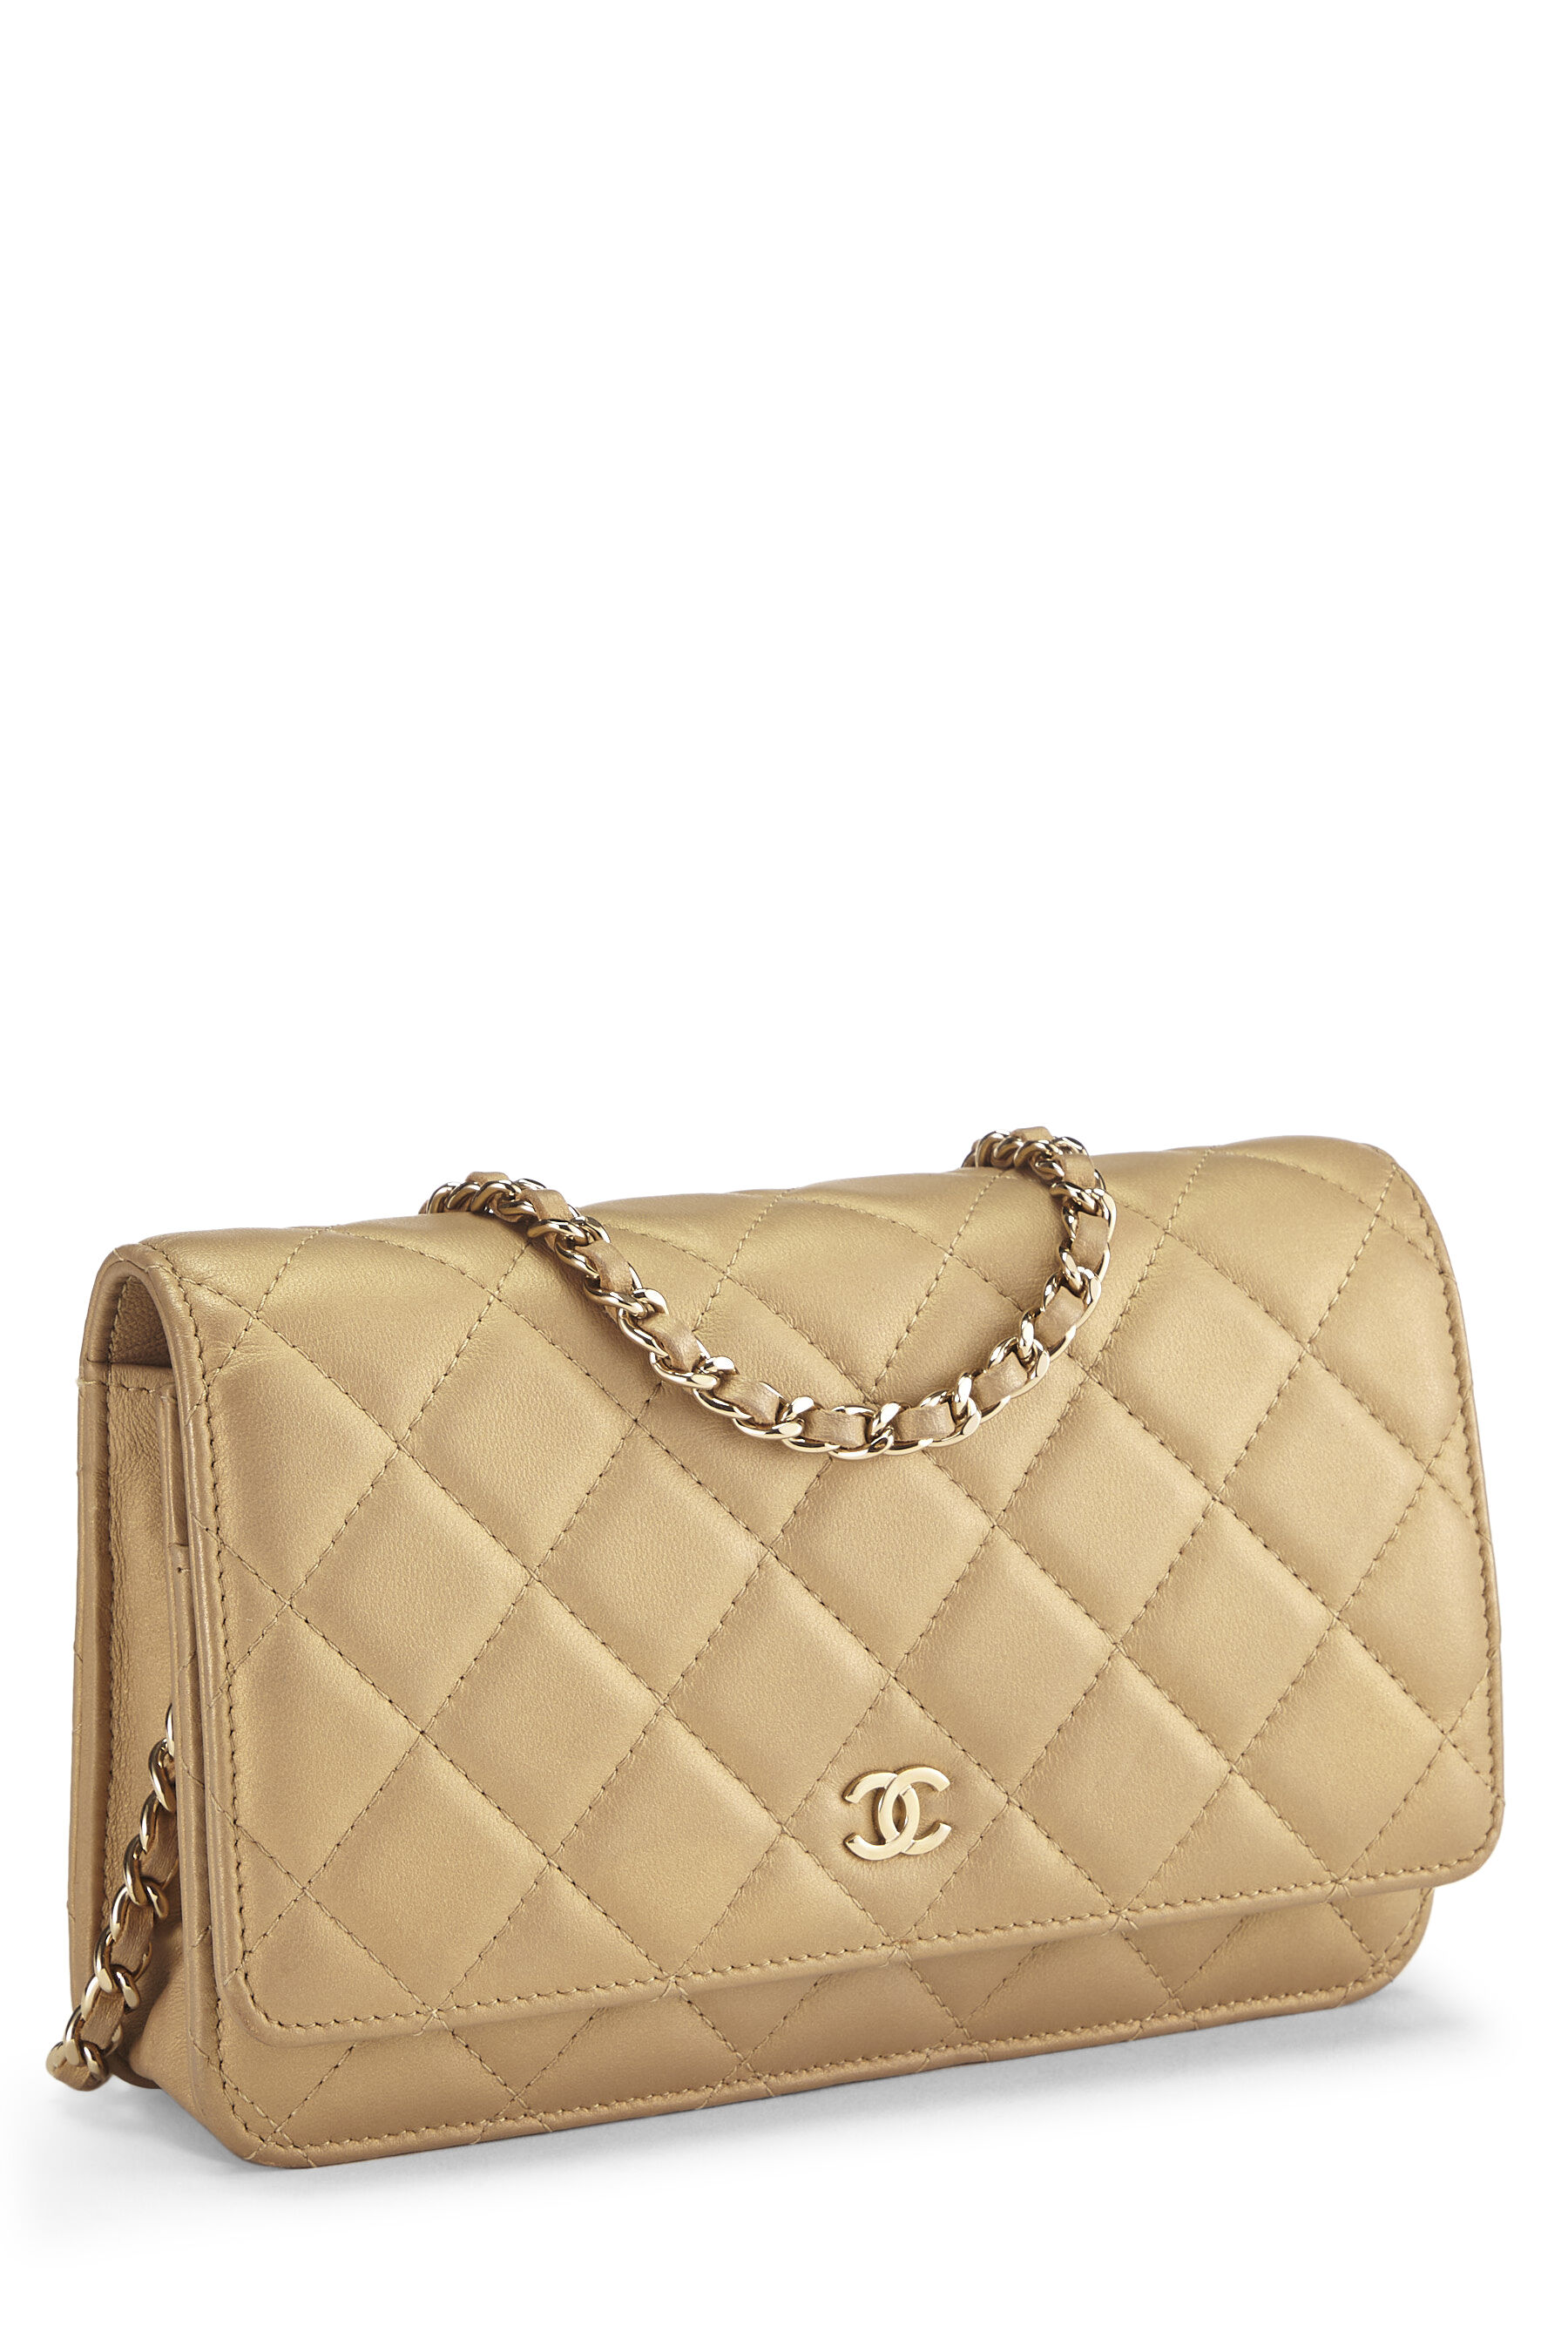 Chanel - Metallic Gold Lambskin Classic Wallet-On-Chain (WOC)